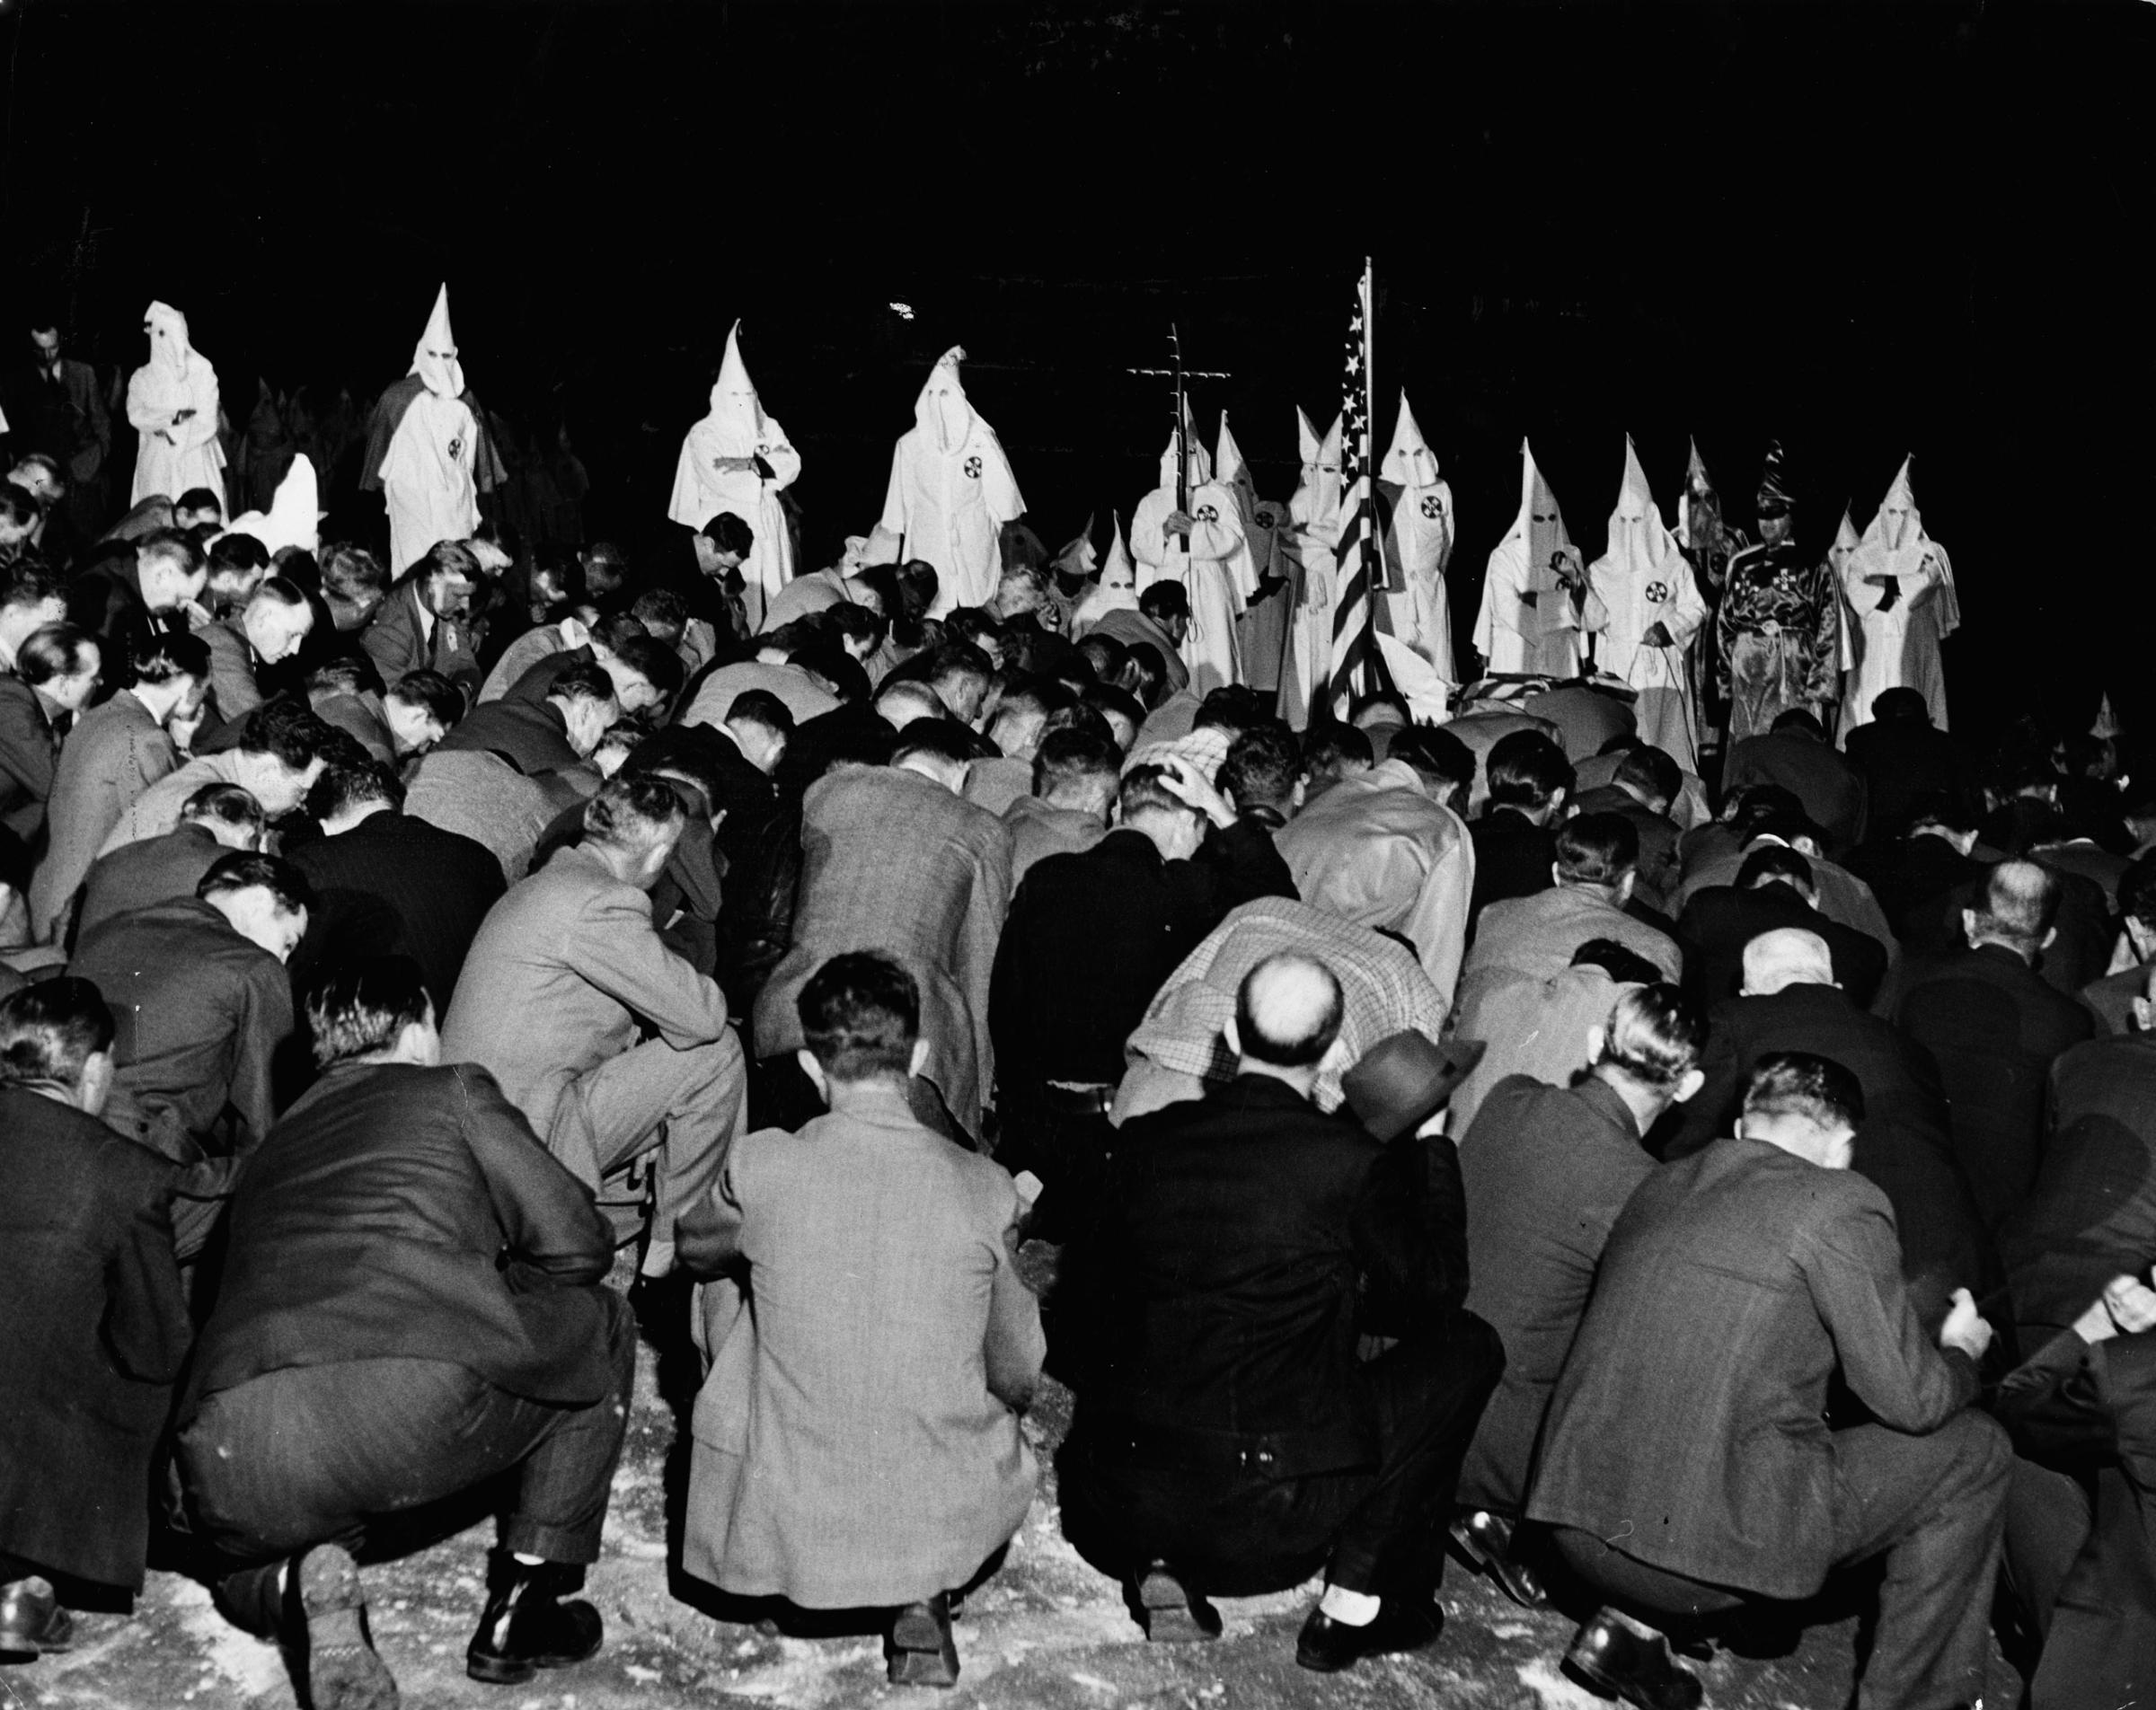 Klan initiates (including some Atlanta policemen) kneel before the local Grand Dragon during a ritual in Georgia, 1946.